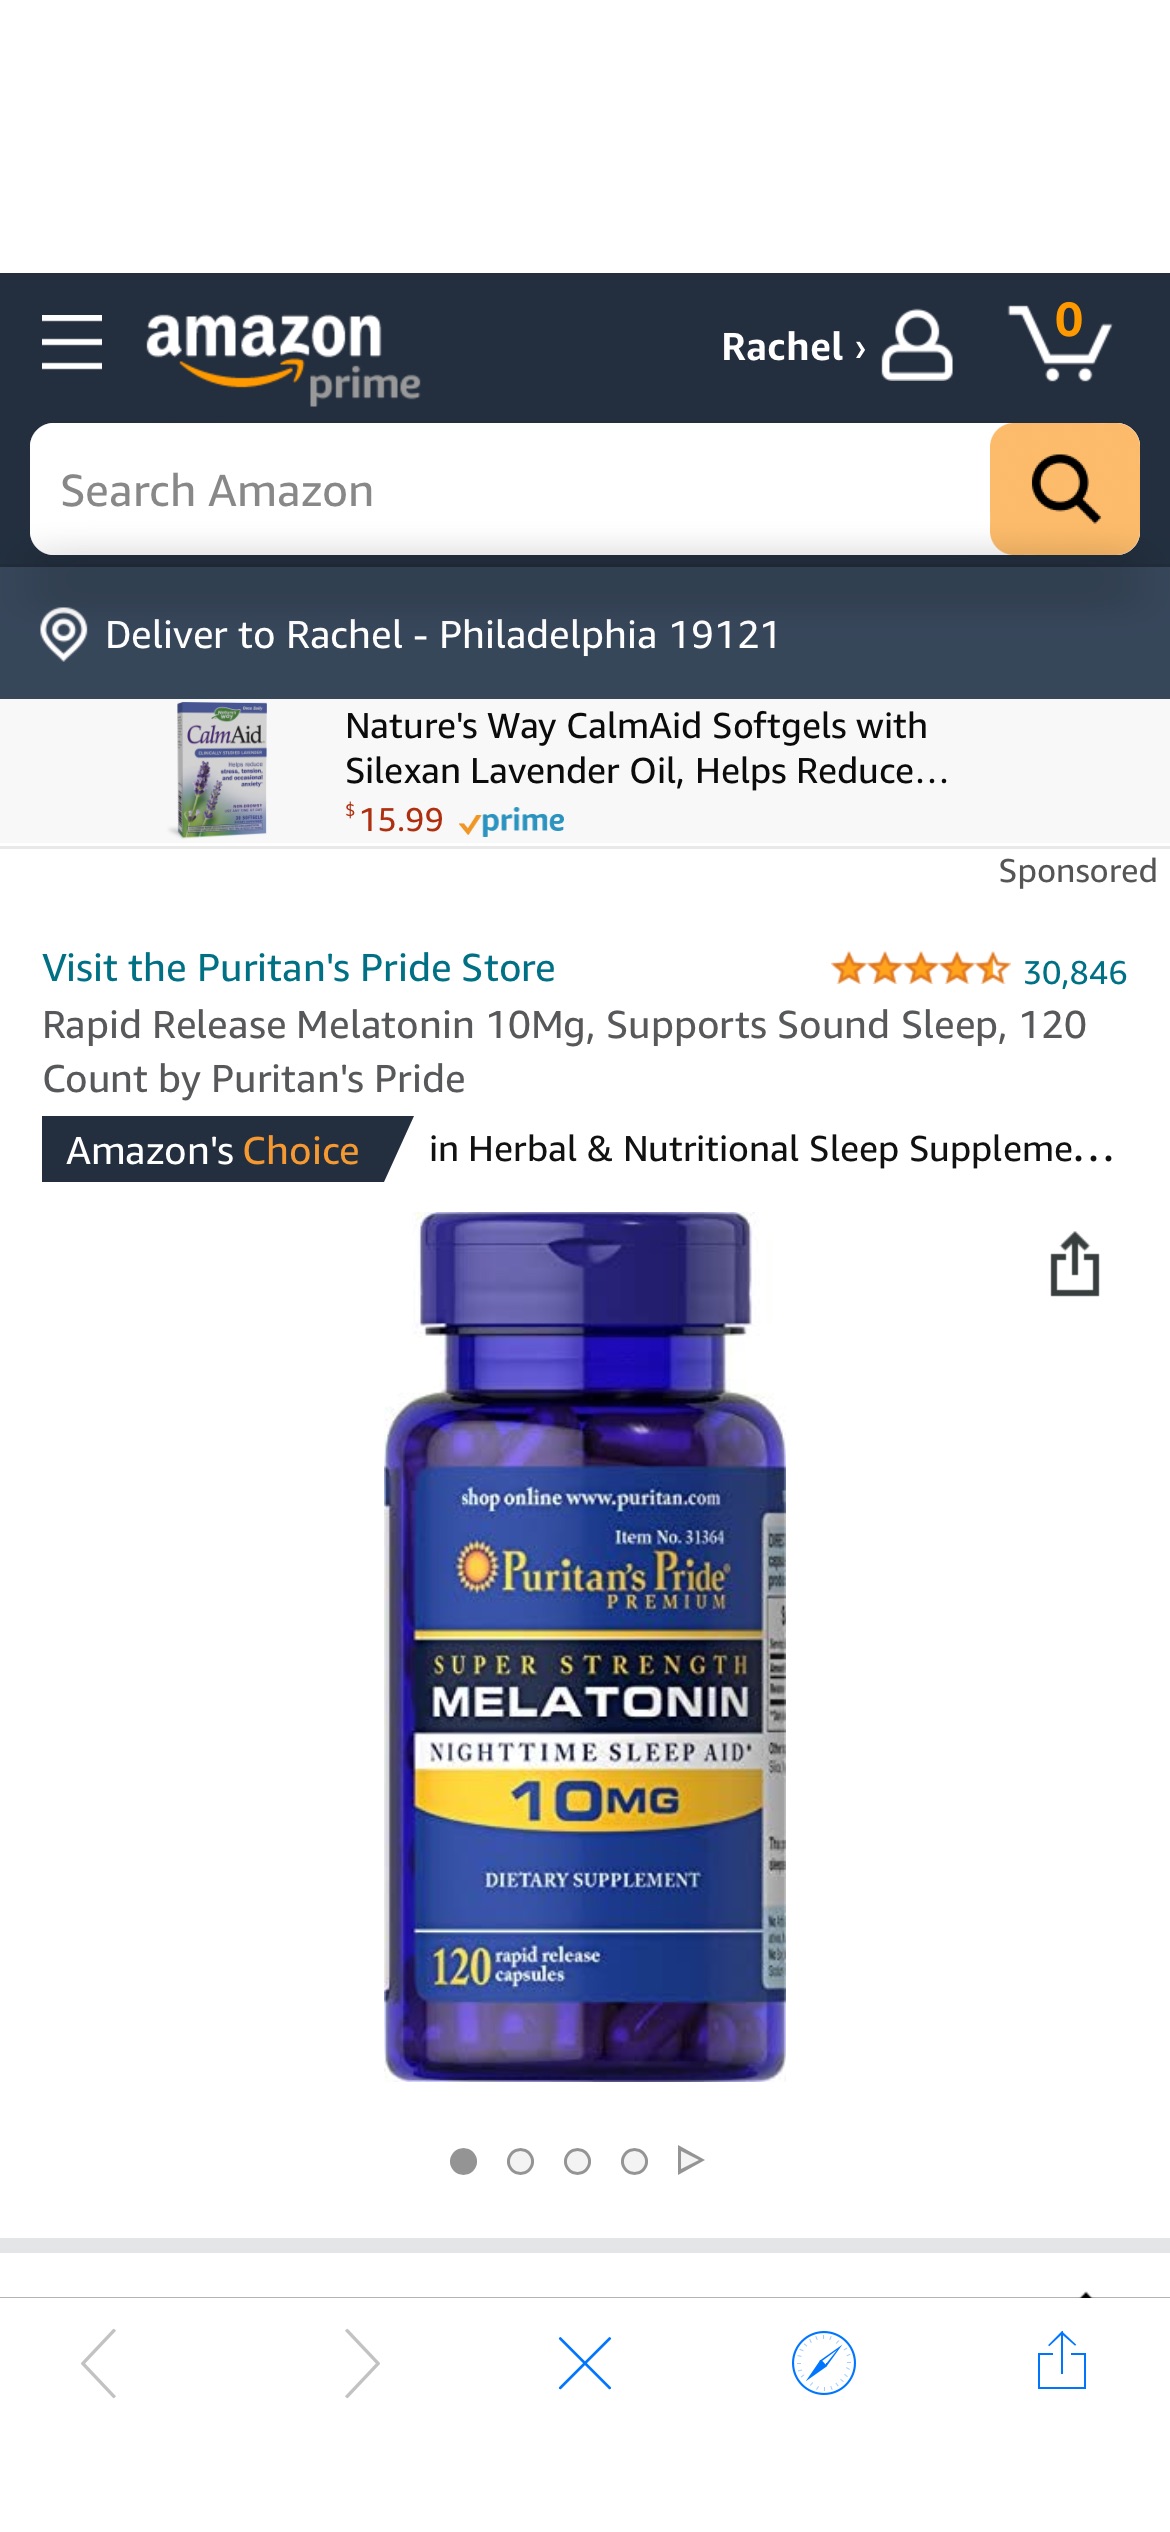 Amazon.com: Rapid Release Melatonin 10Mg, Supports Sound Sleep, 120 Count by Puritan's Pride : Health & Household